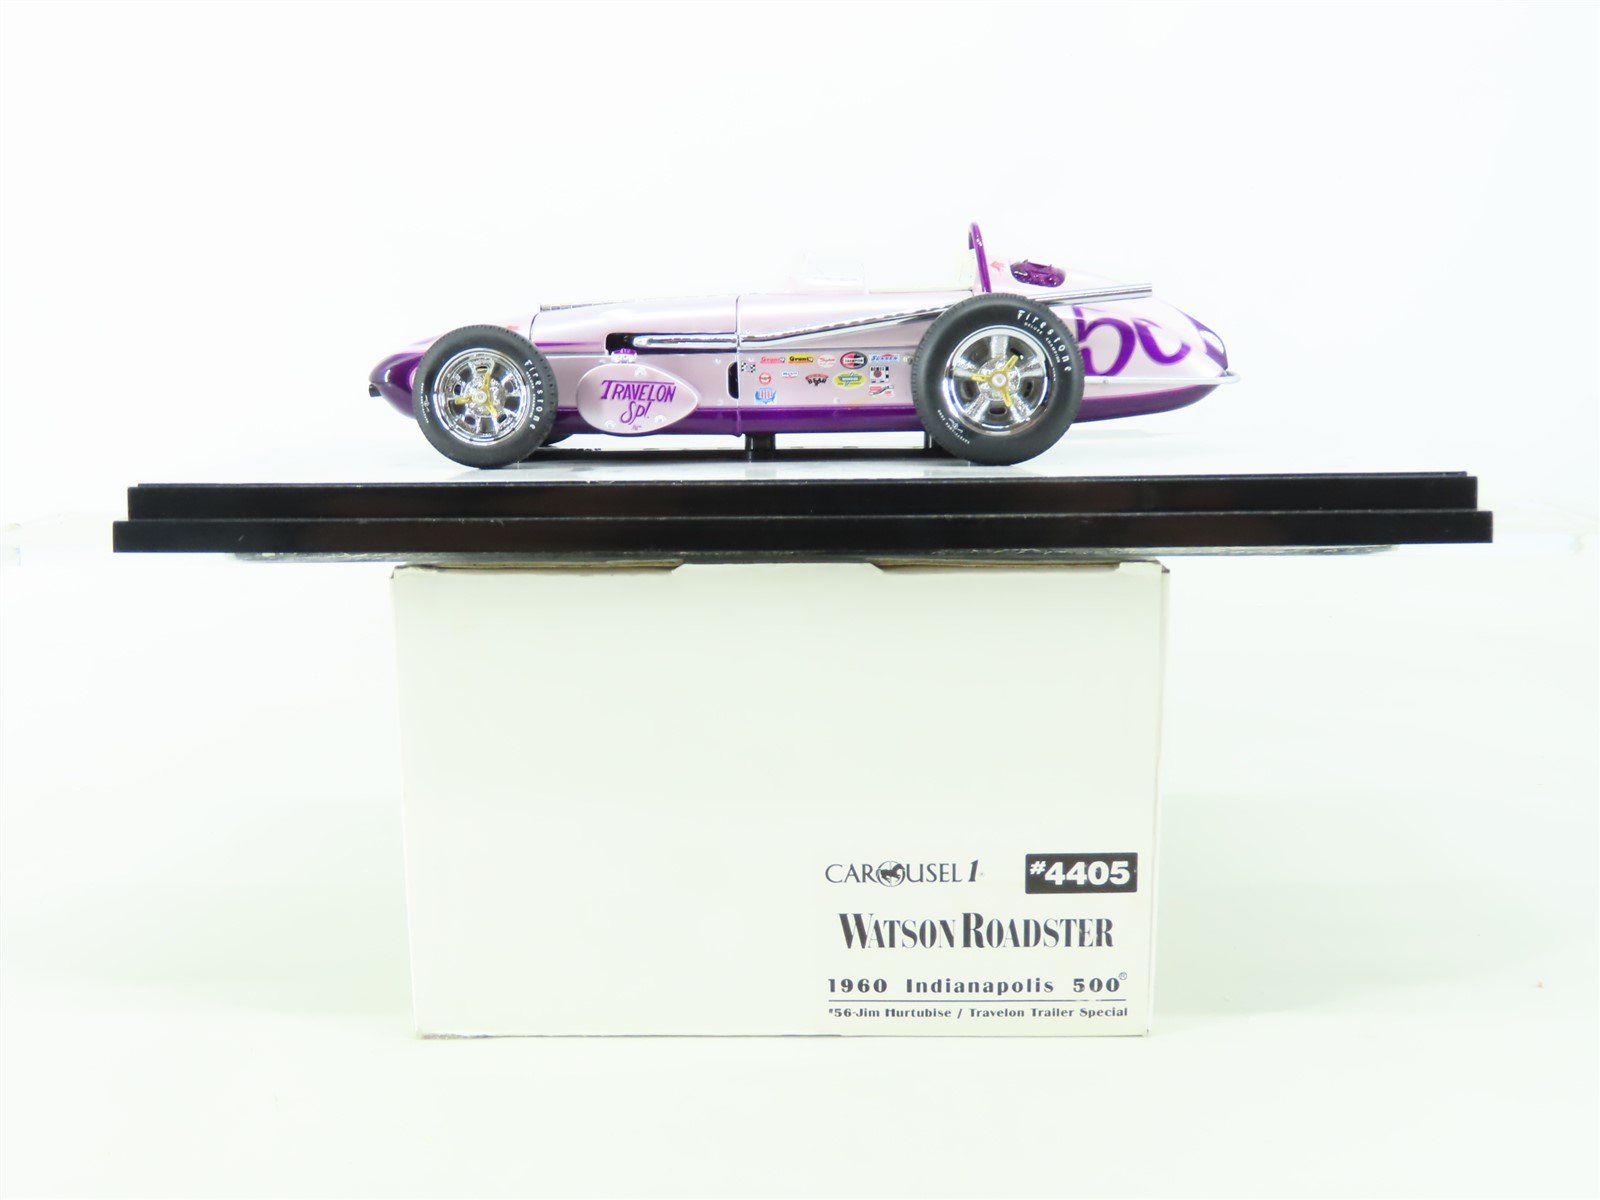 1:18 Scale Carousel 1 #4405 1960 Indianapolis 500 Watson Roadster #56 w/ COA